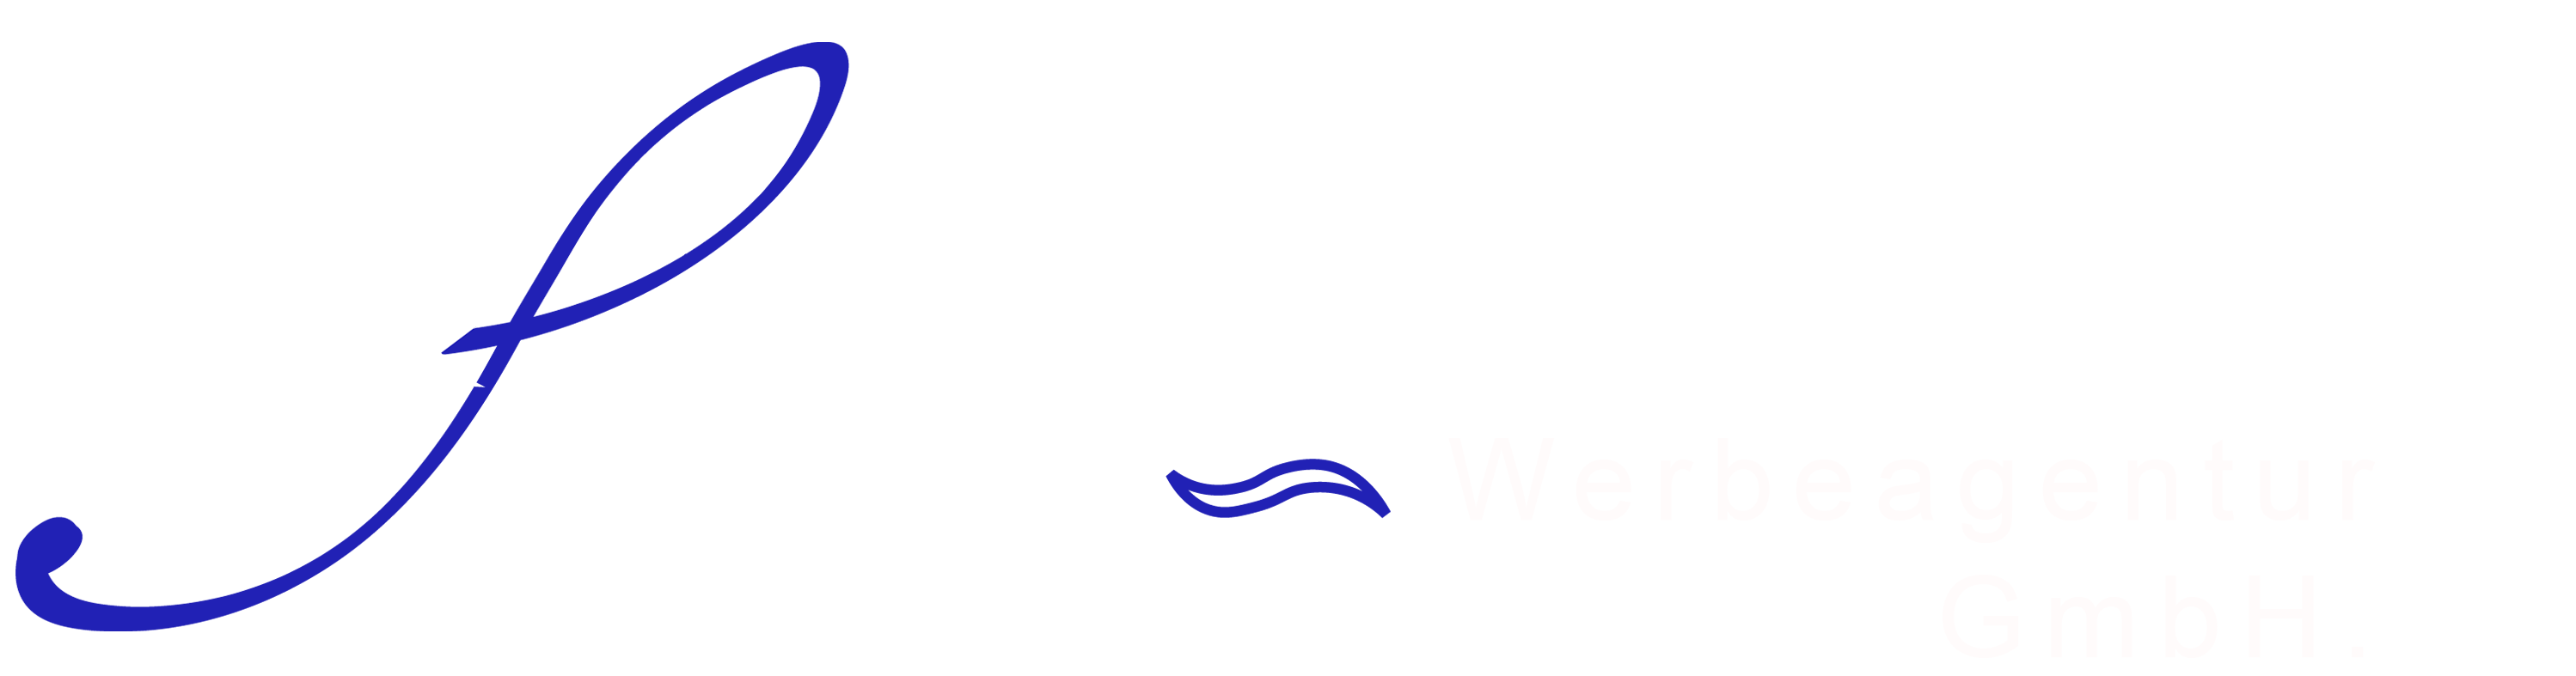 Sirius Werbeagentur GmbH